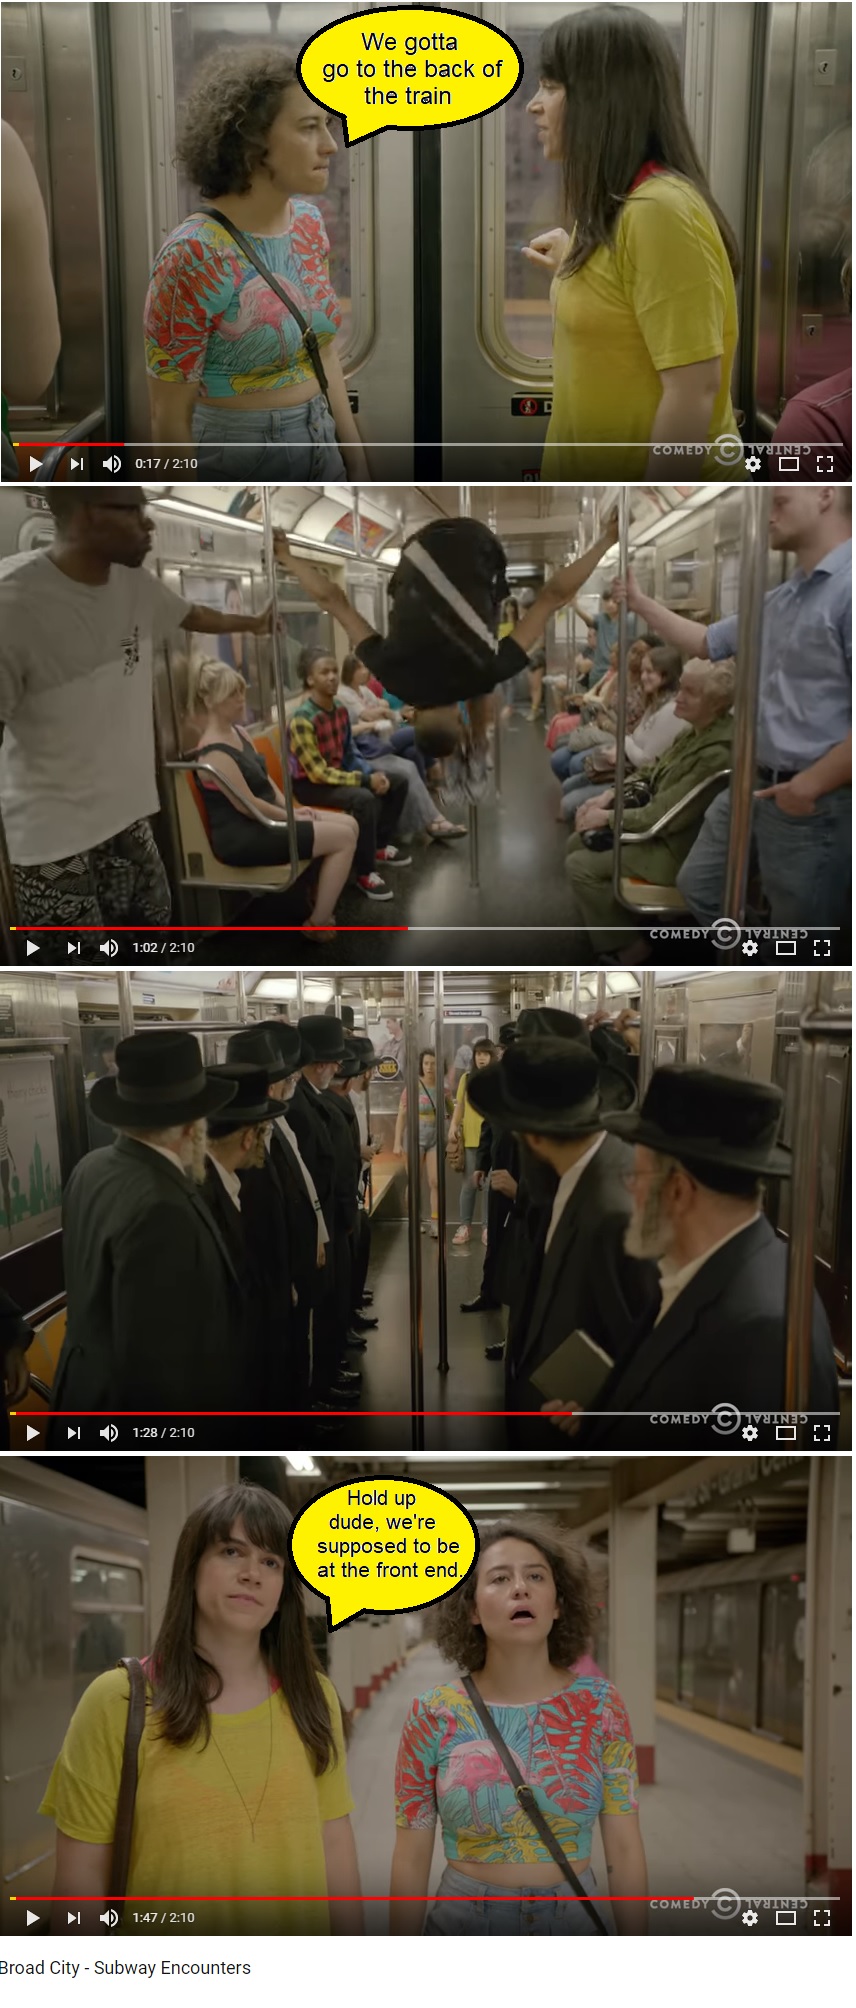 Broad City Subway Encounters.jpg